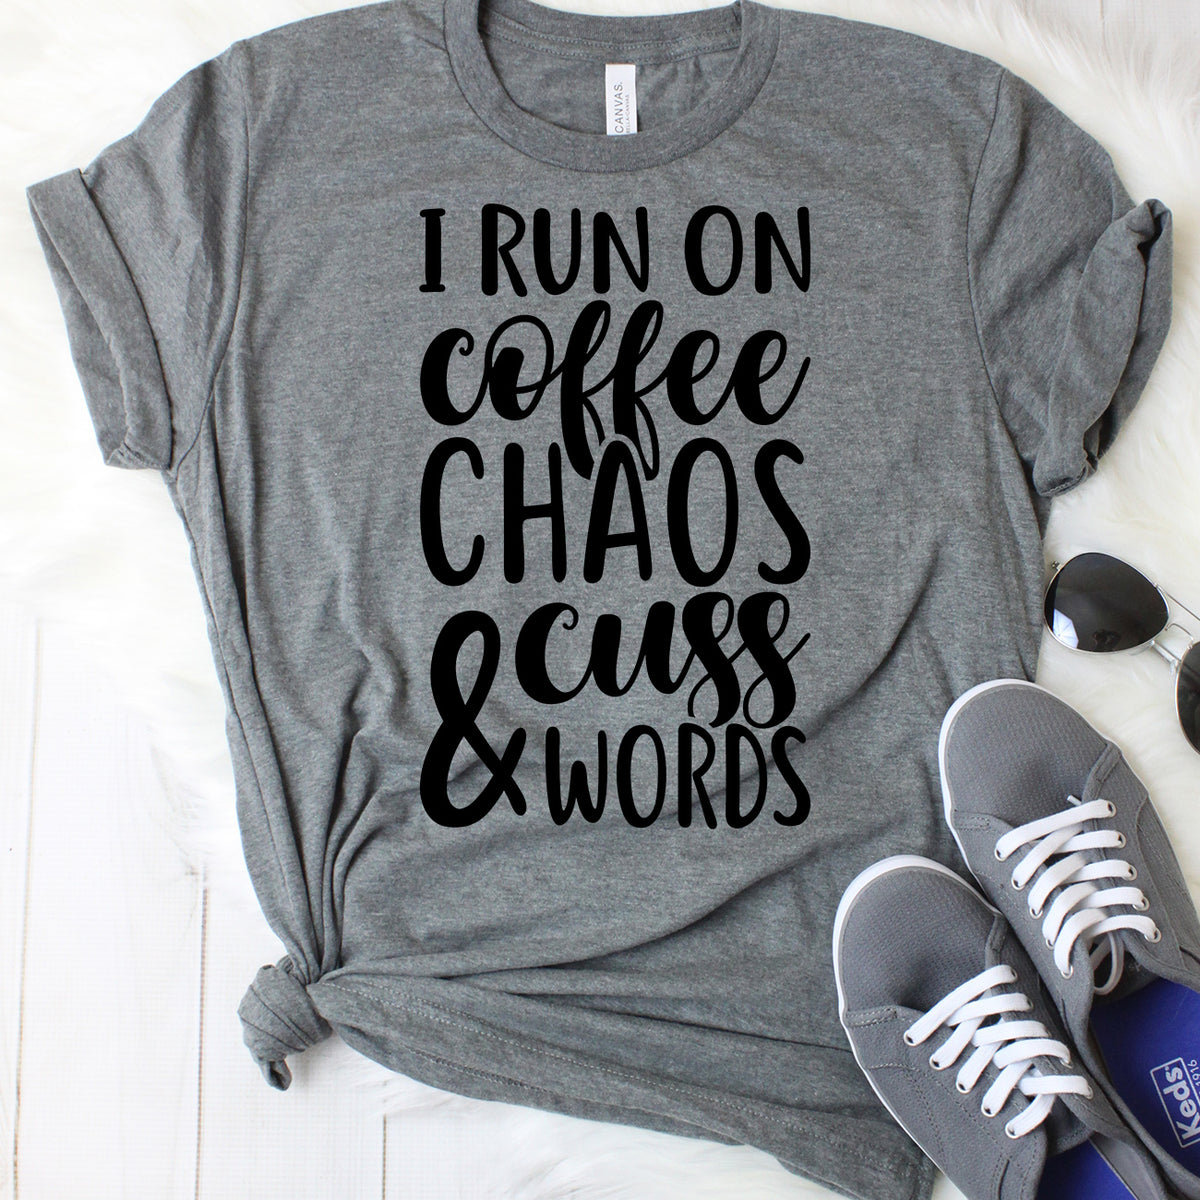 I Run on Coffee, Chaos, & Cuss Words T-Shirt